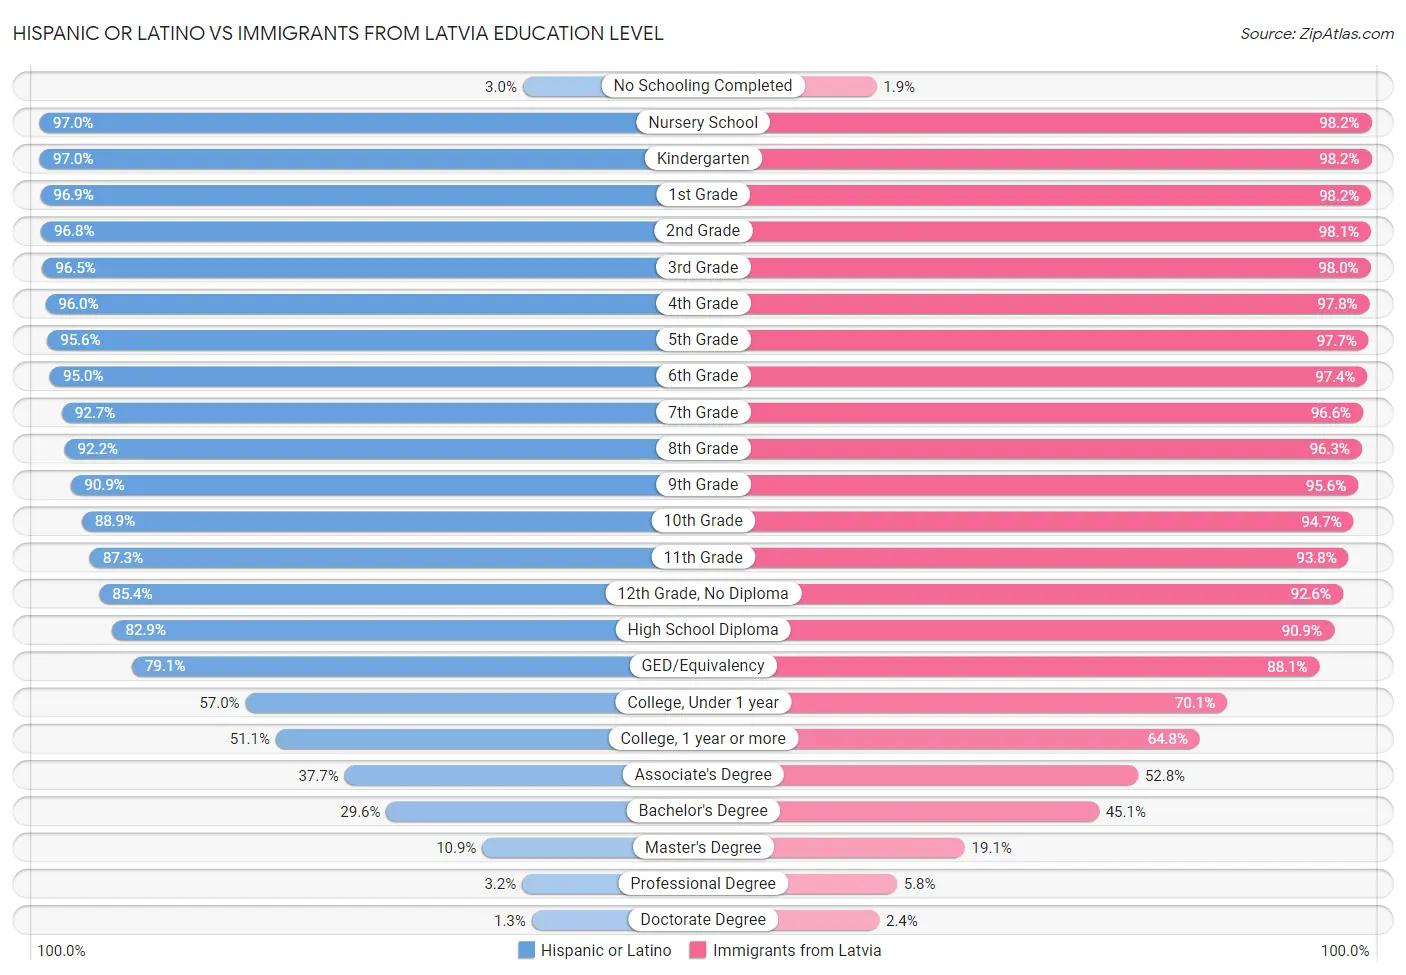 Hispanic or Latino vs Immigrants from Latvia Education Level